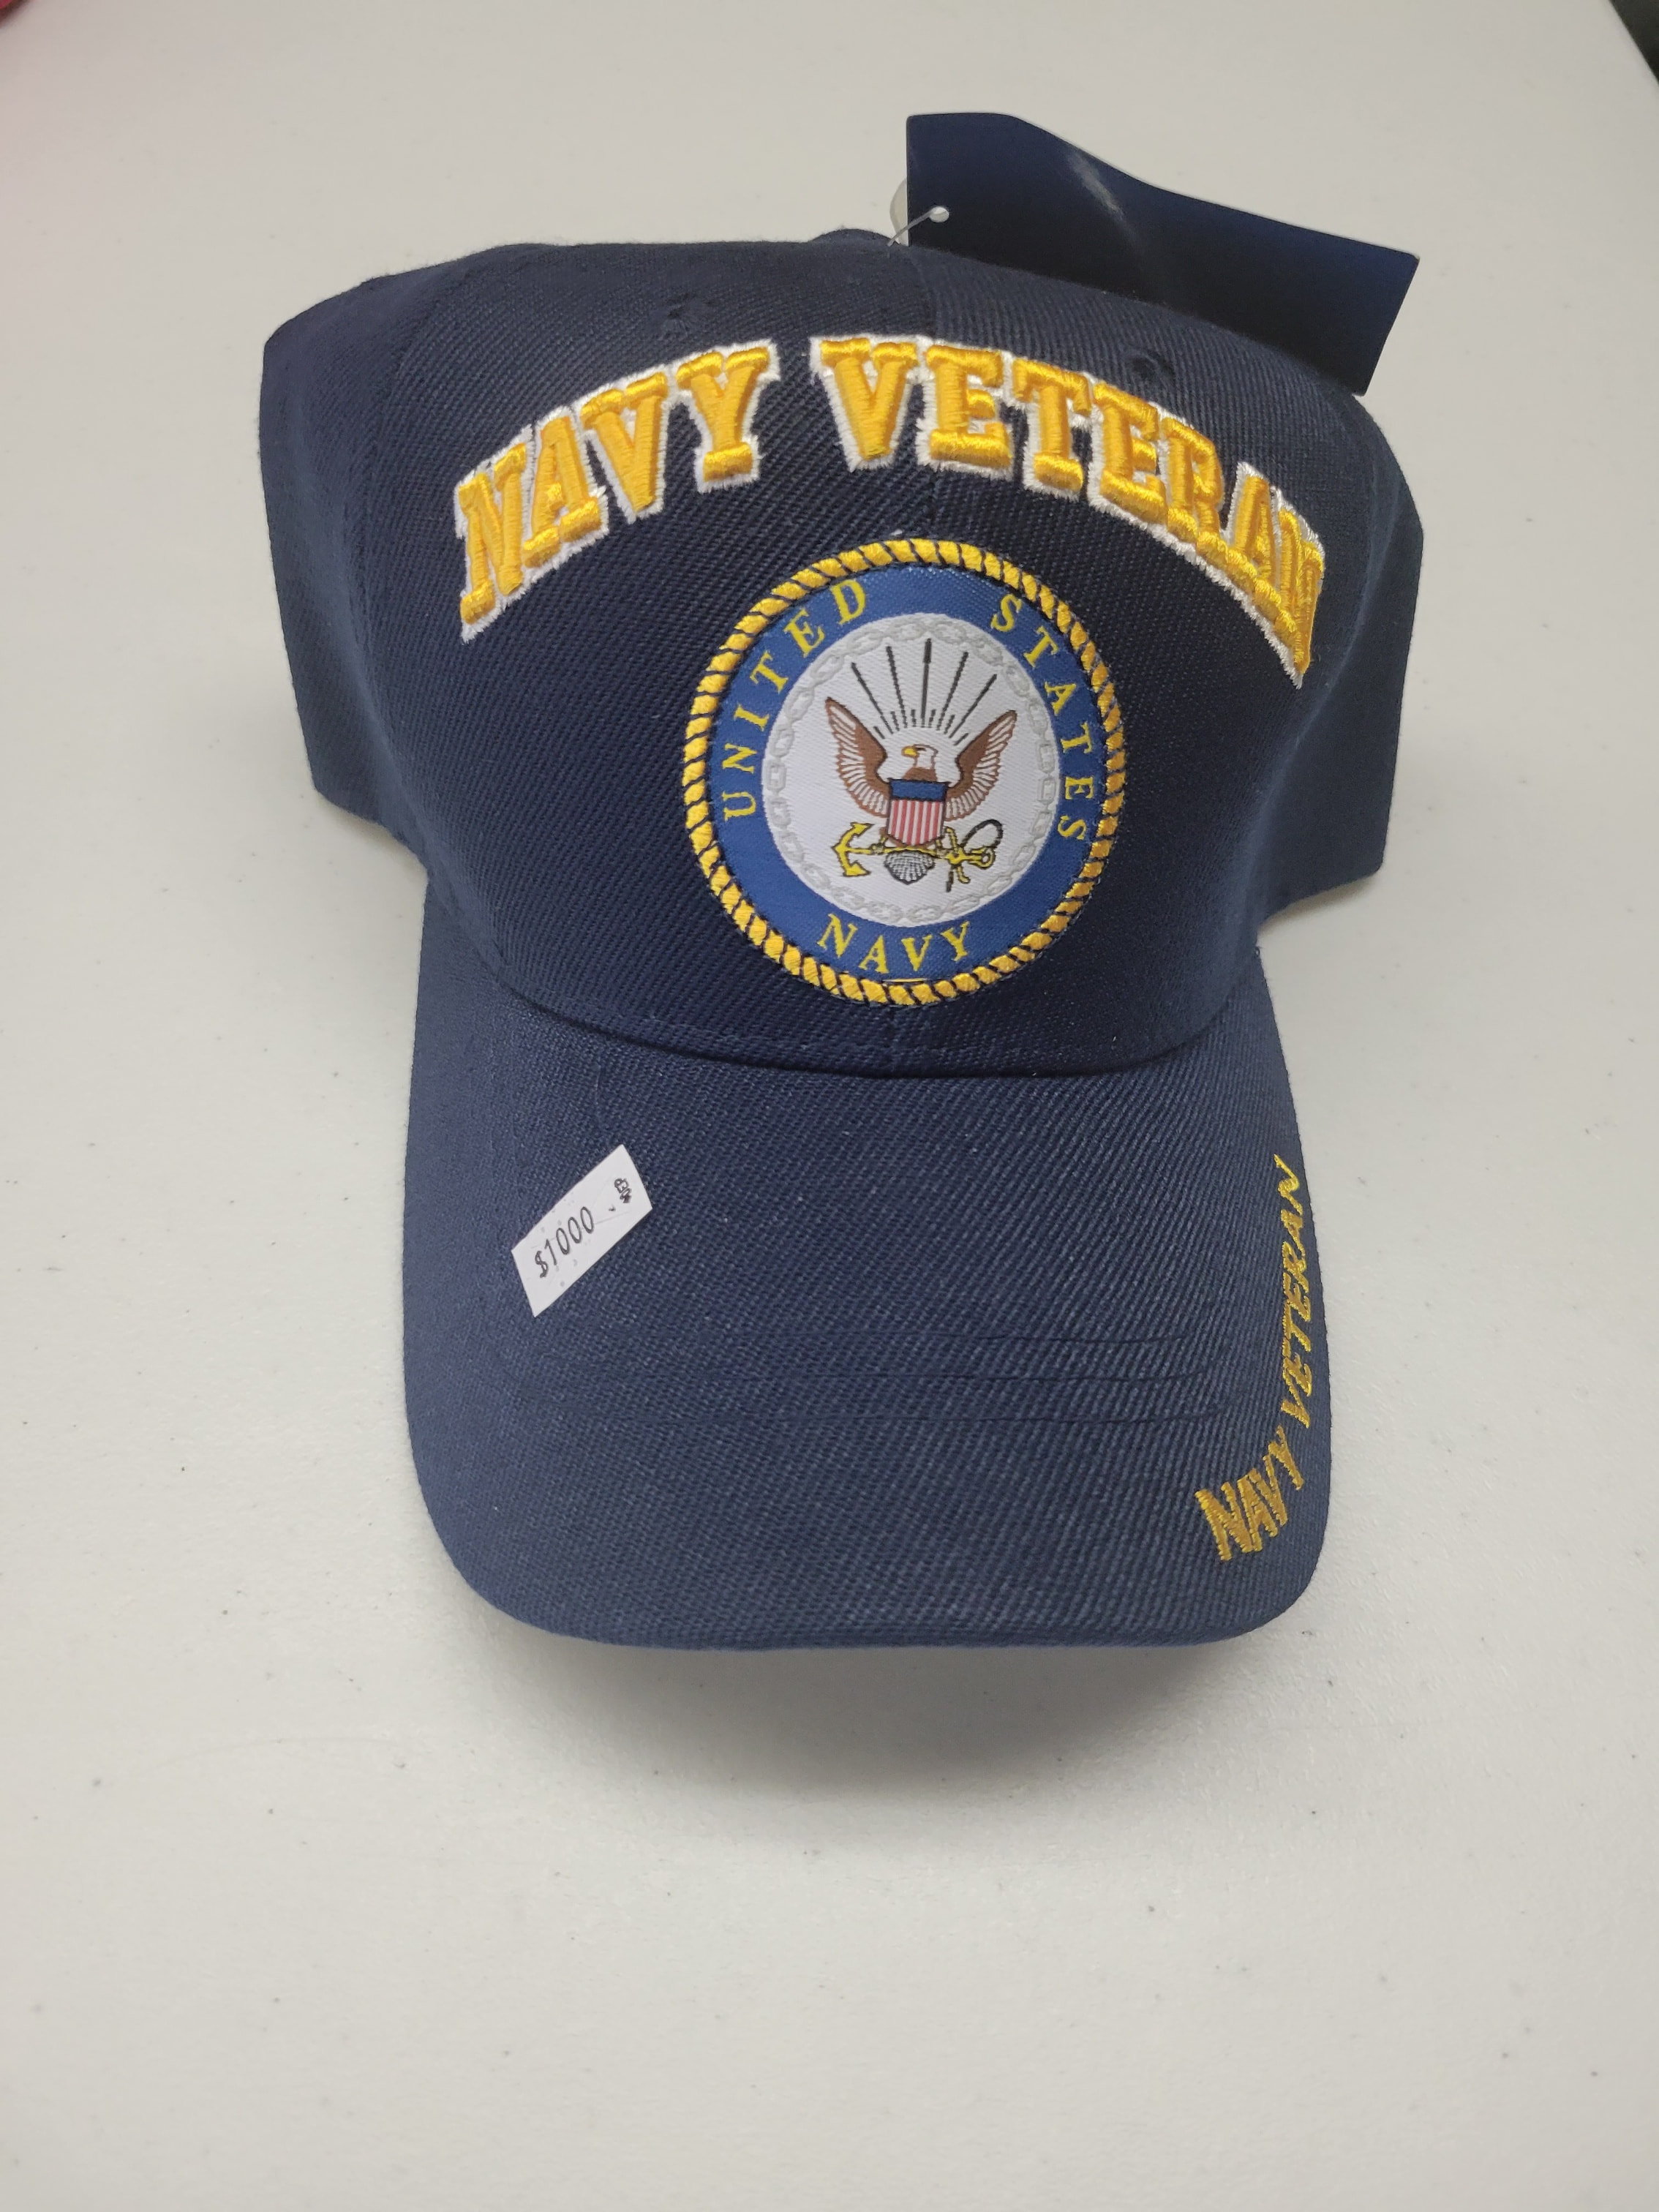 Navy Veteran Ball Cap